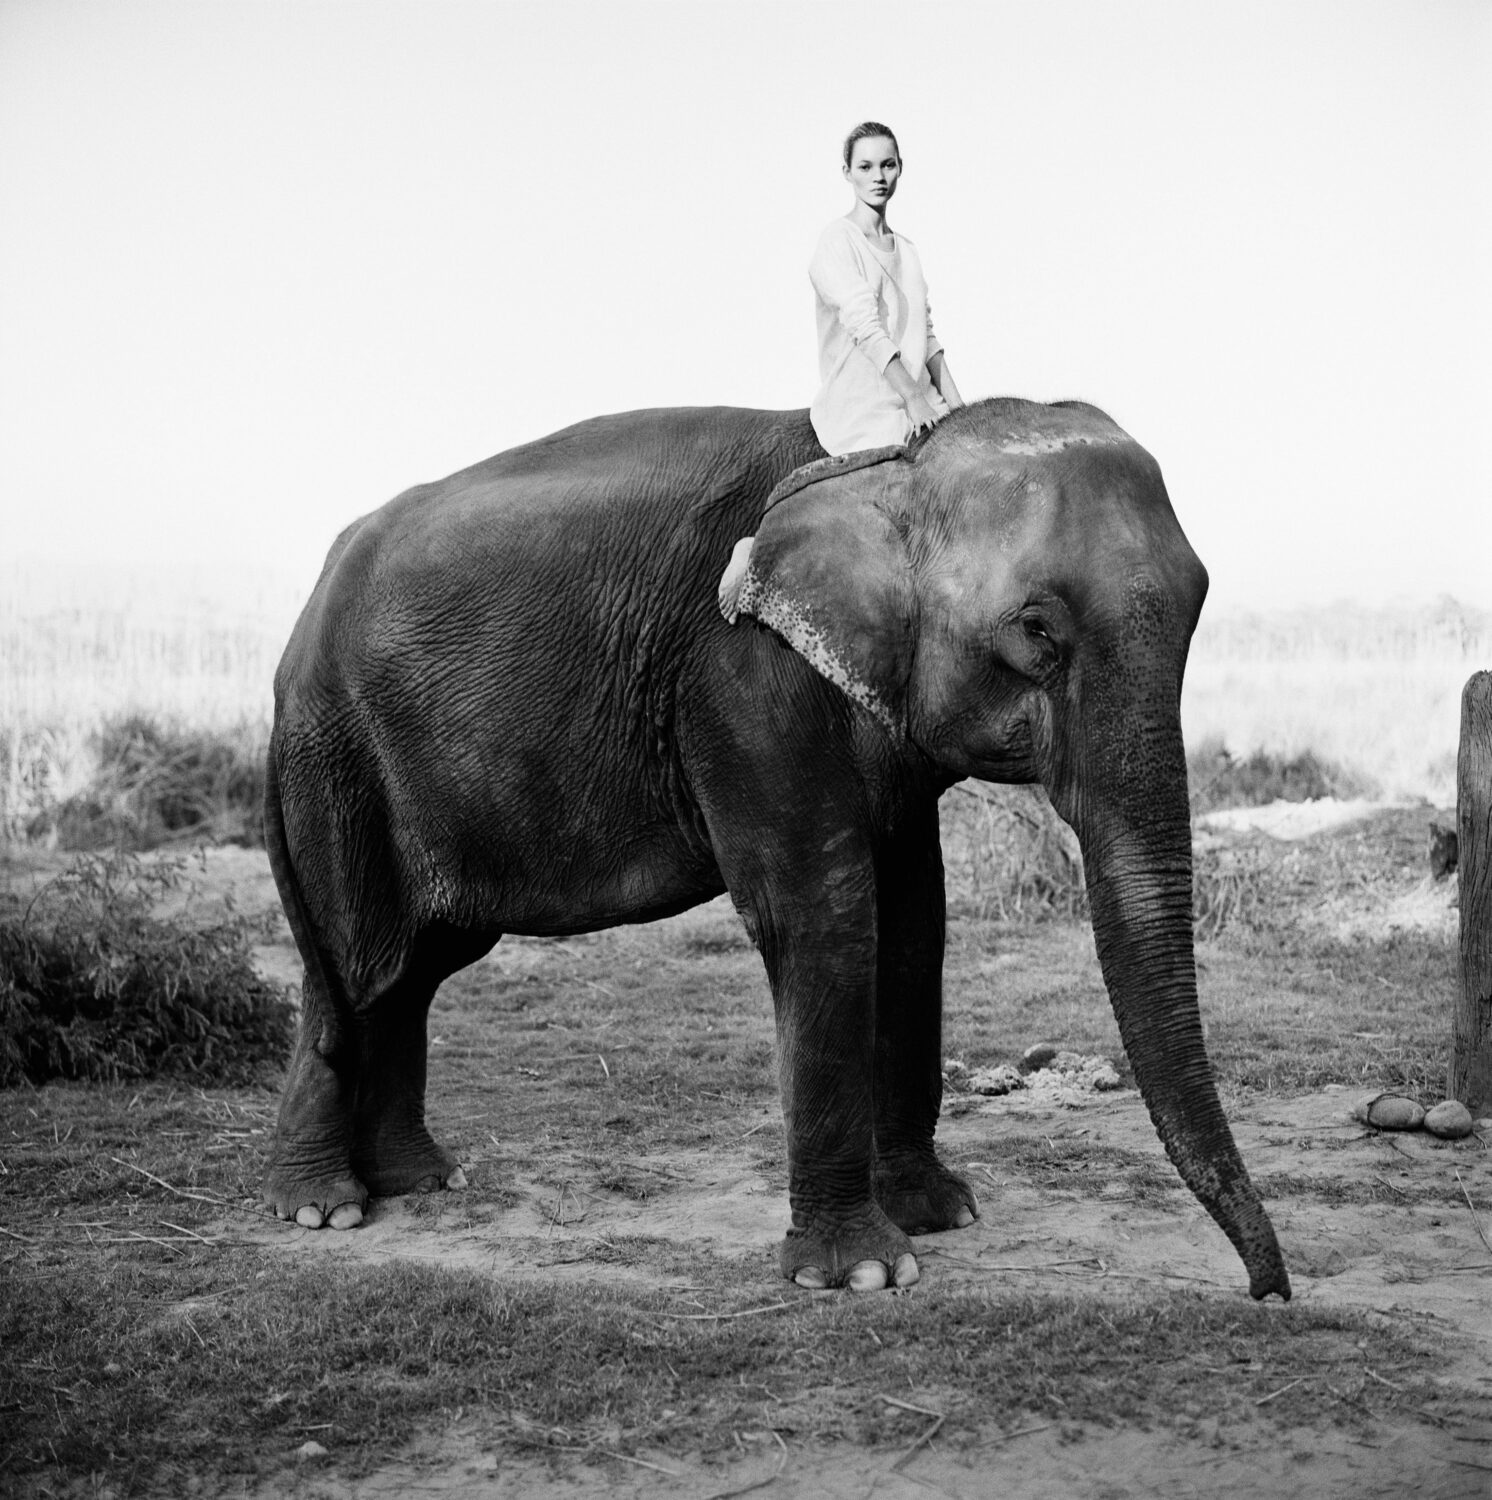 Arthur Elgort: Kate Moss on Elephant